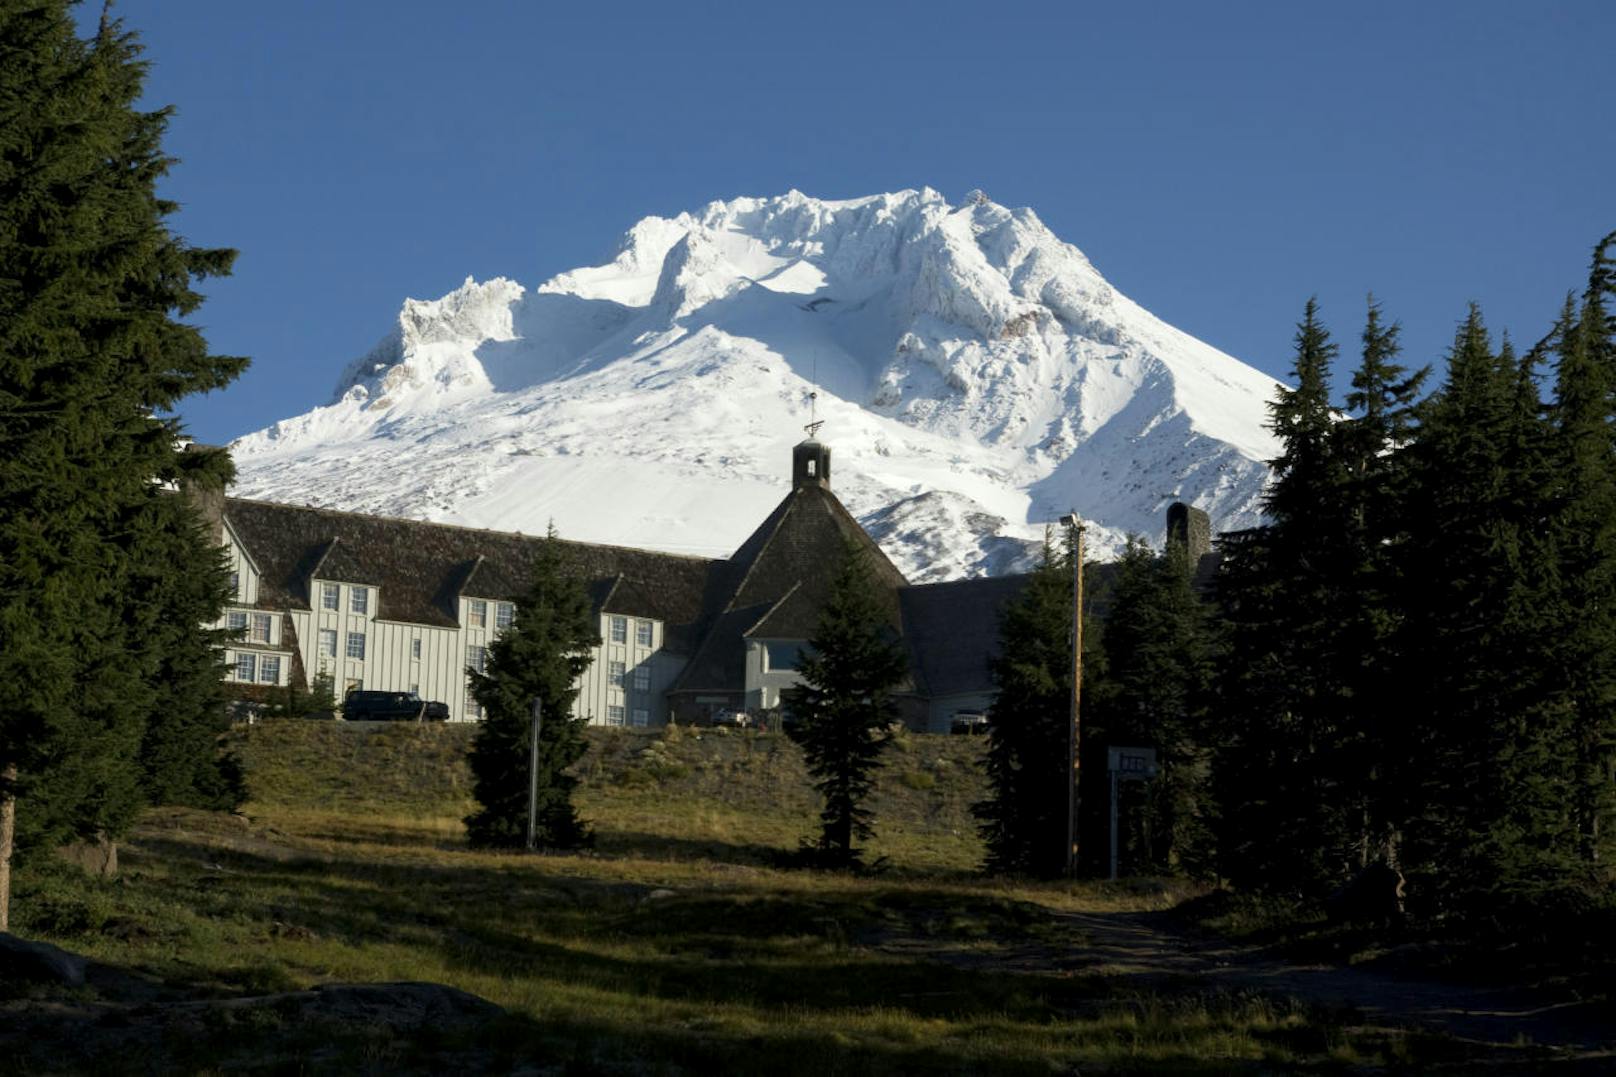 Timberline Lodge - Timberline, Oregon, USA
bekannt aus <b>"The Shining"</b>